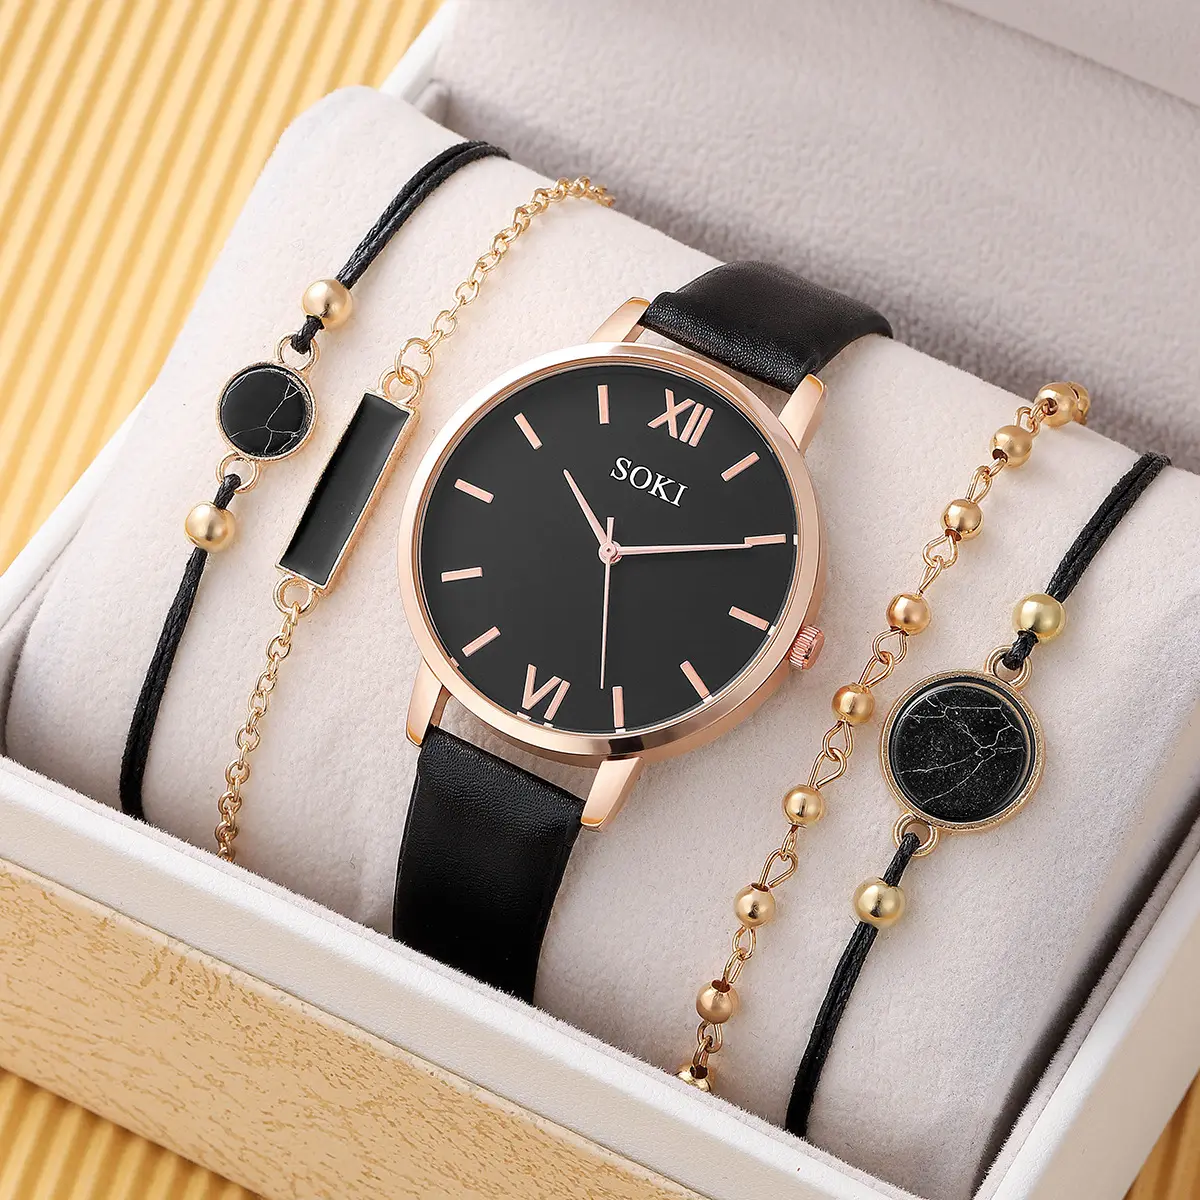 Luxury Starry Sky Women, Gold Watches Leather Strap Stylish Female Casual Quartz Wristwatch Unique Girls Gift/